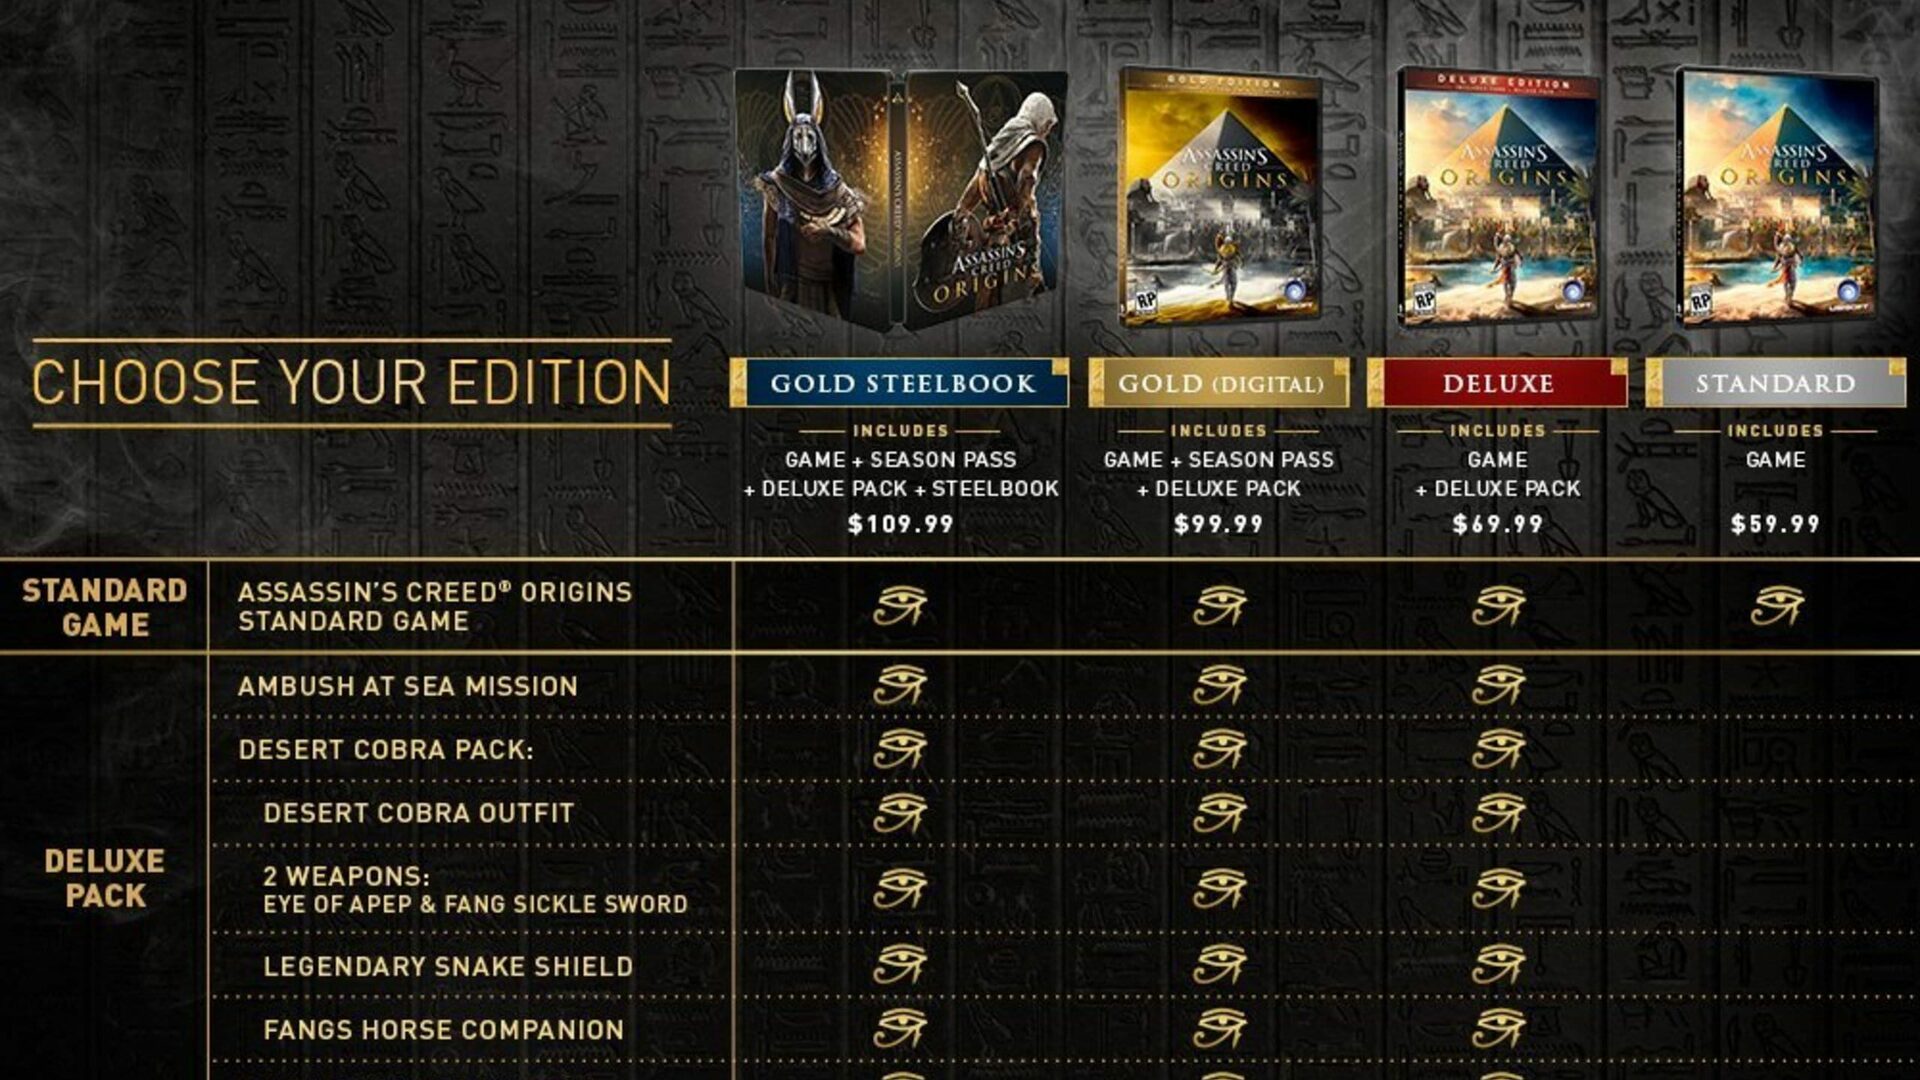 Assassin origin gold. Assassin's Creed Origins. Deluxe Edition. Assassin's Creed Origins Gold Edition. Assassins Creed Истоки Gold Edition. Ассасин Крид Истоки Голд эдишн.